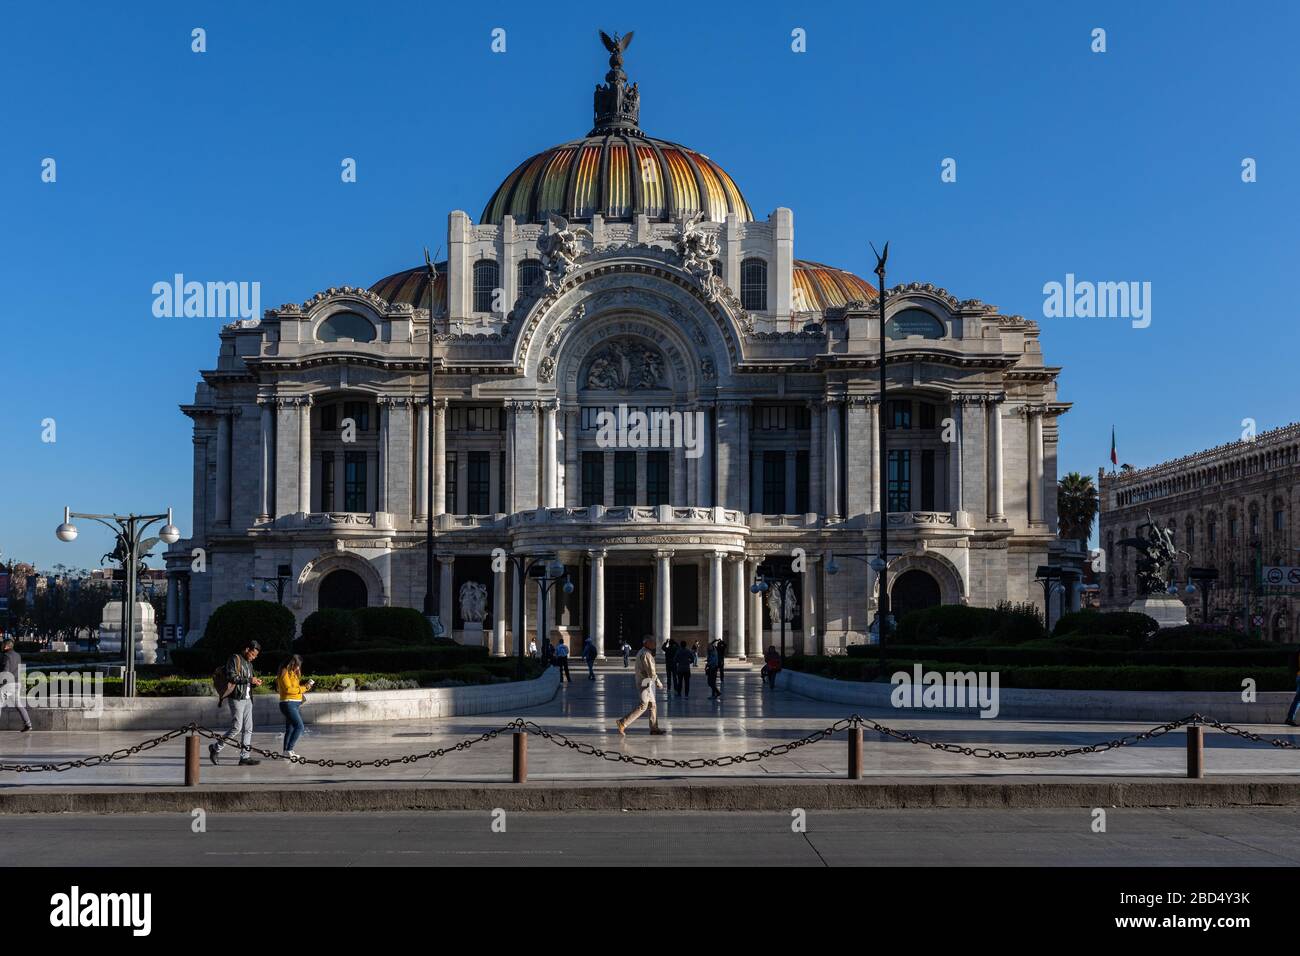 Fine Arts Palace - Palacio de Bellas Artes cultural center in Mexico City, Mexico. Stock Photo